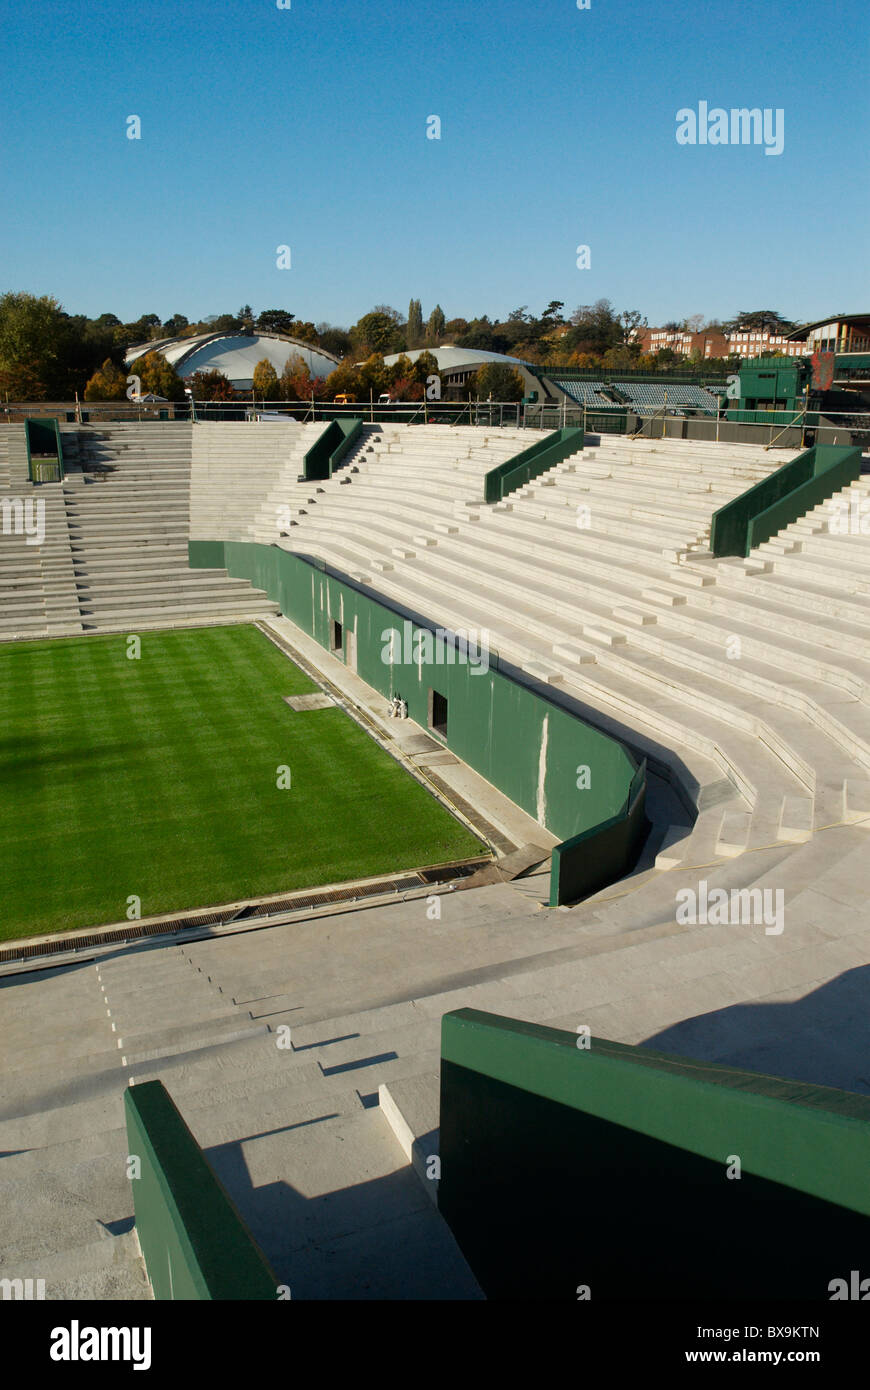 The new Court No. 2 takes shape All England Lawn Tennis Club Wimbledon London UK 2008 Stock Photo